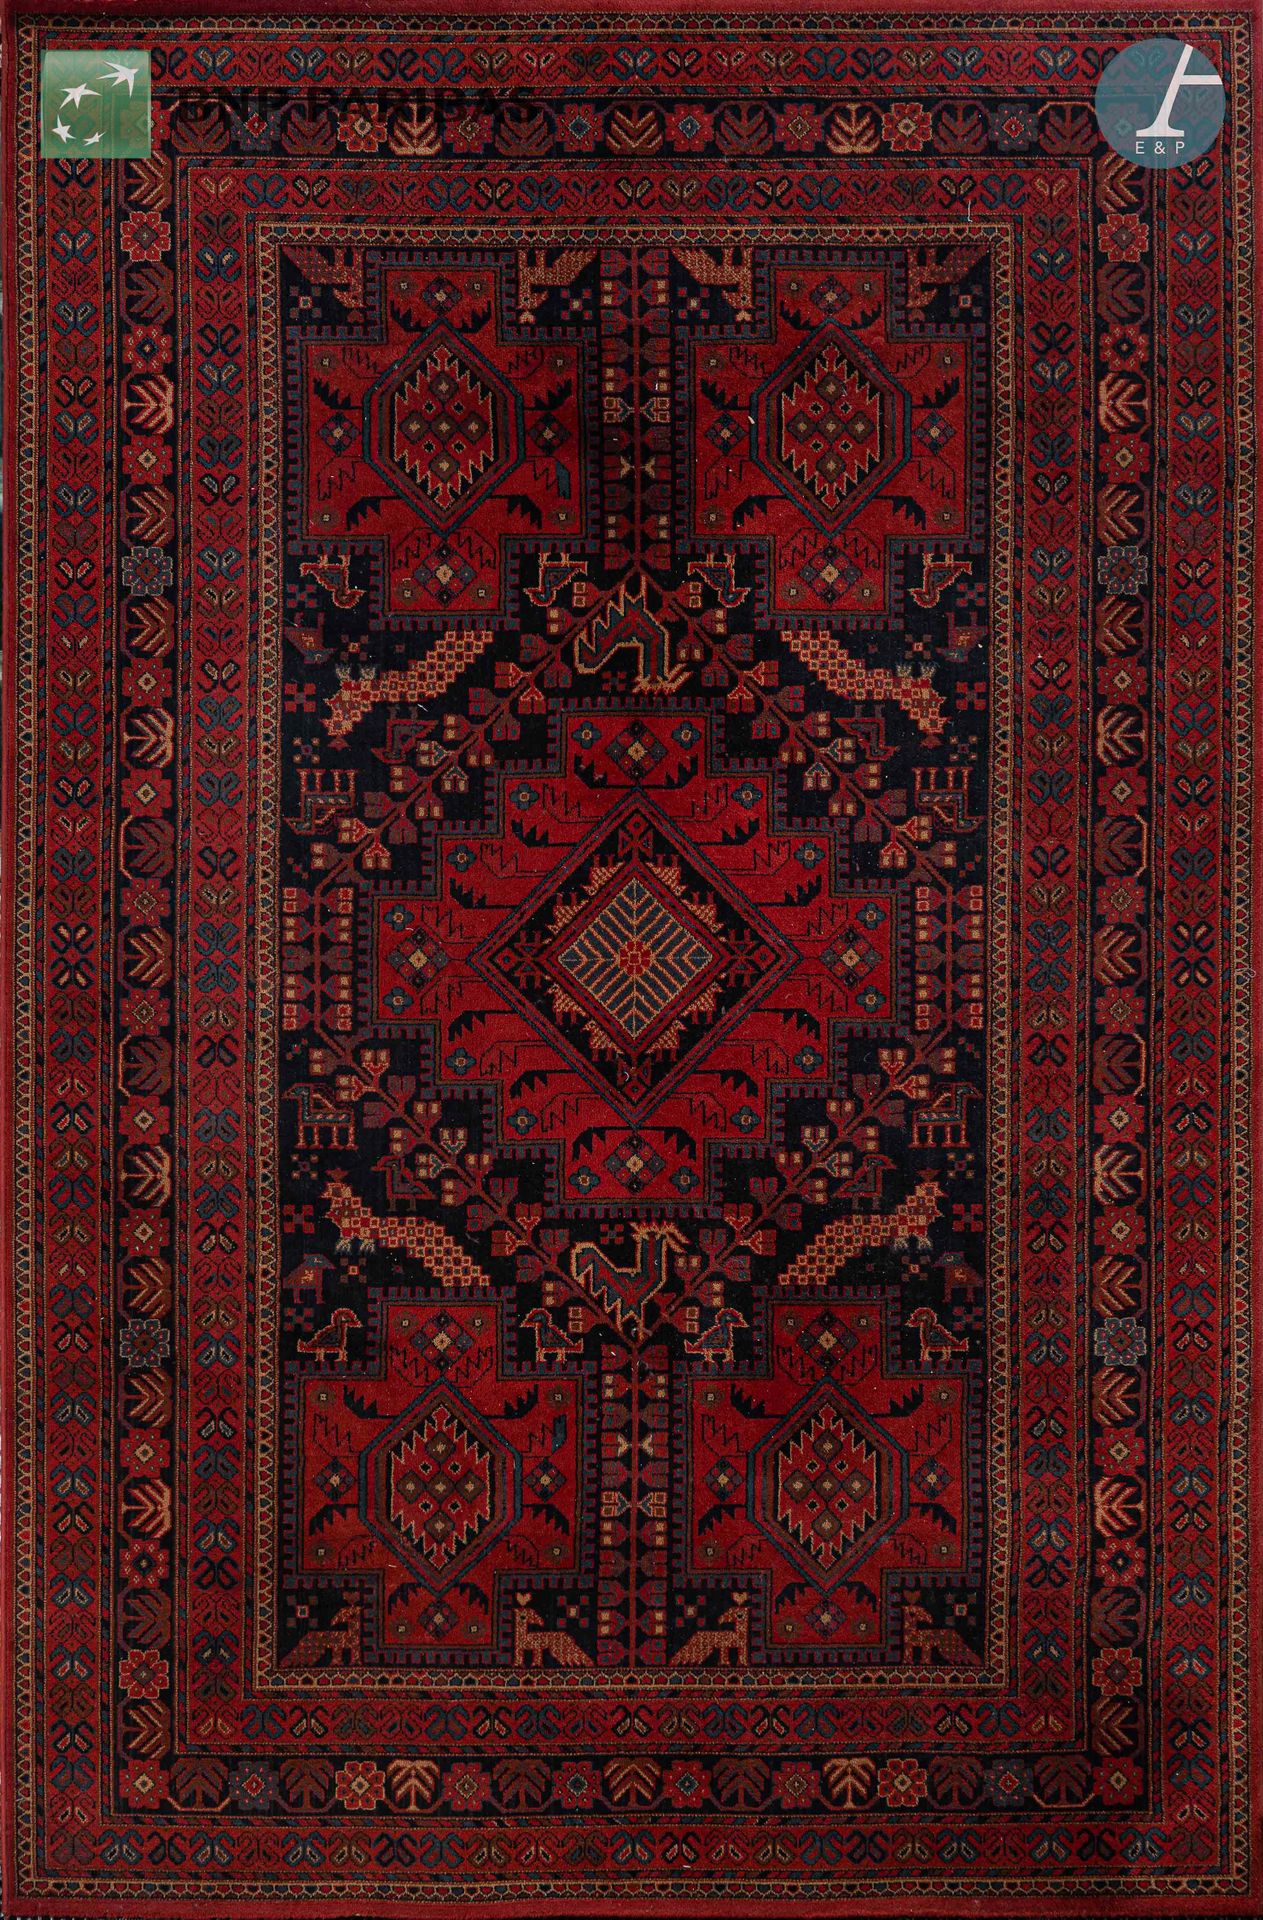 Null 路易-德-波尔塔的房子 
机械地毯，"Mossoul "型号，纯羊毛天鹅绒，红底辫子装饰。
使用状况，侧面有磨损。

300x200cm